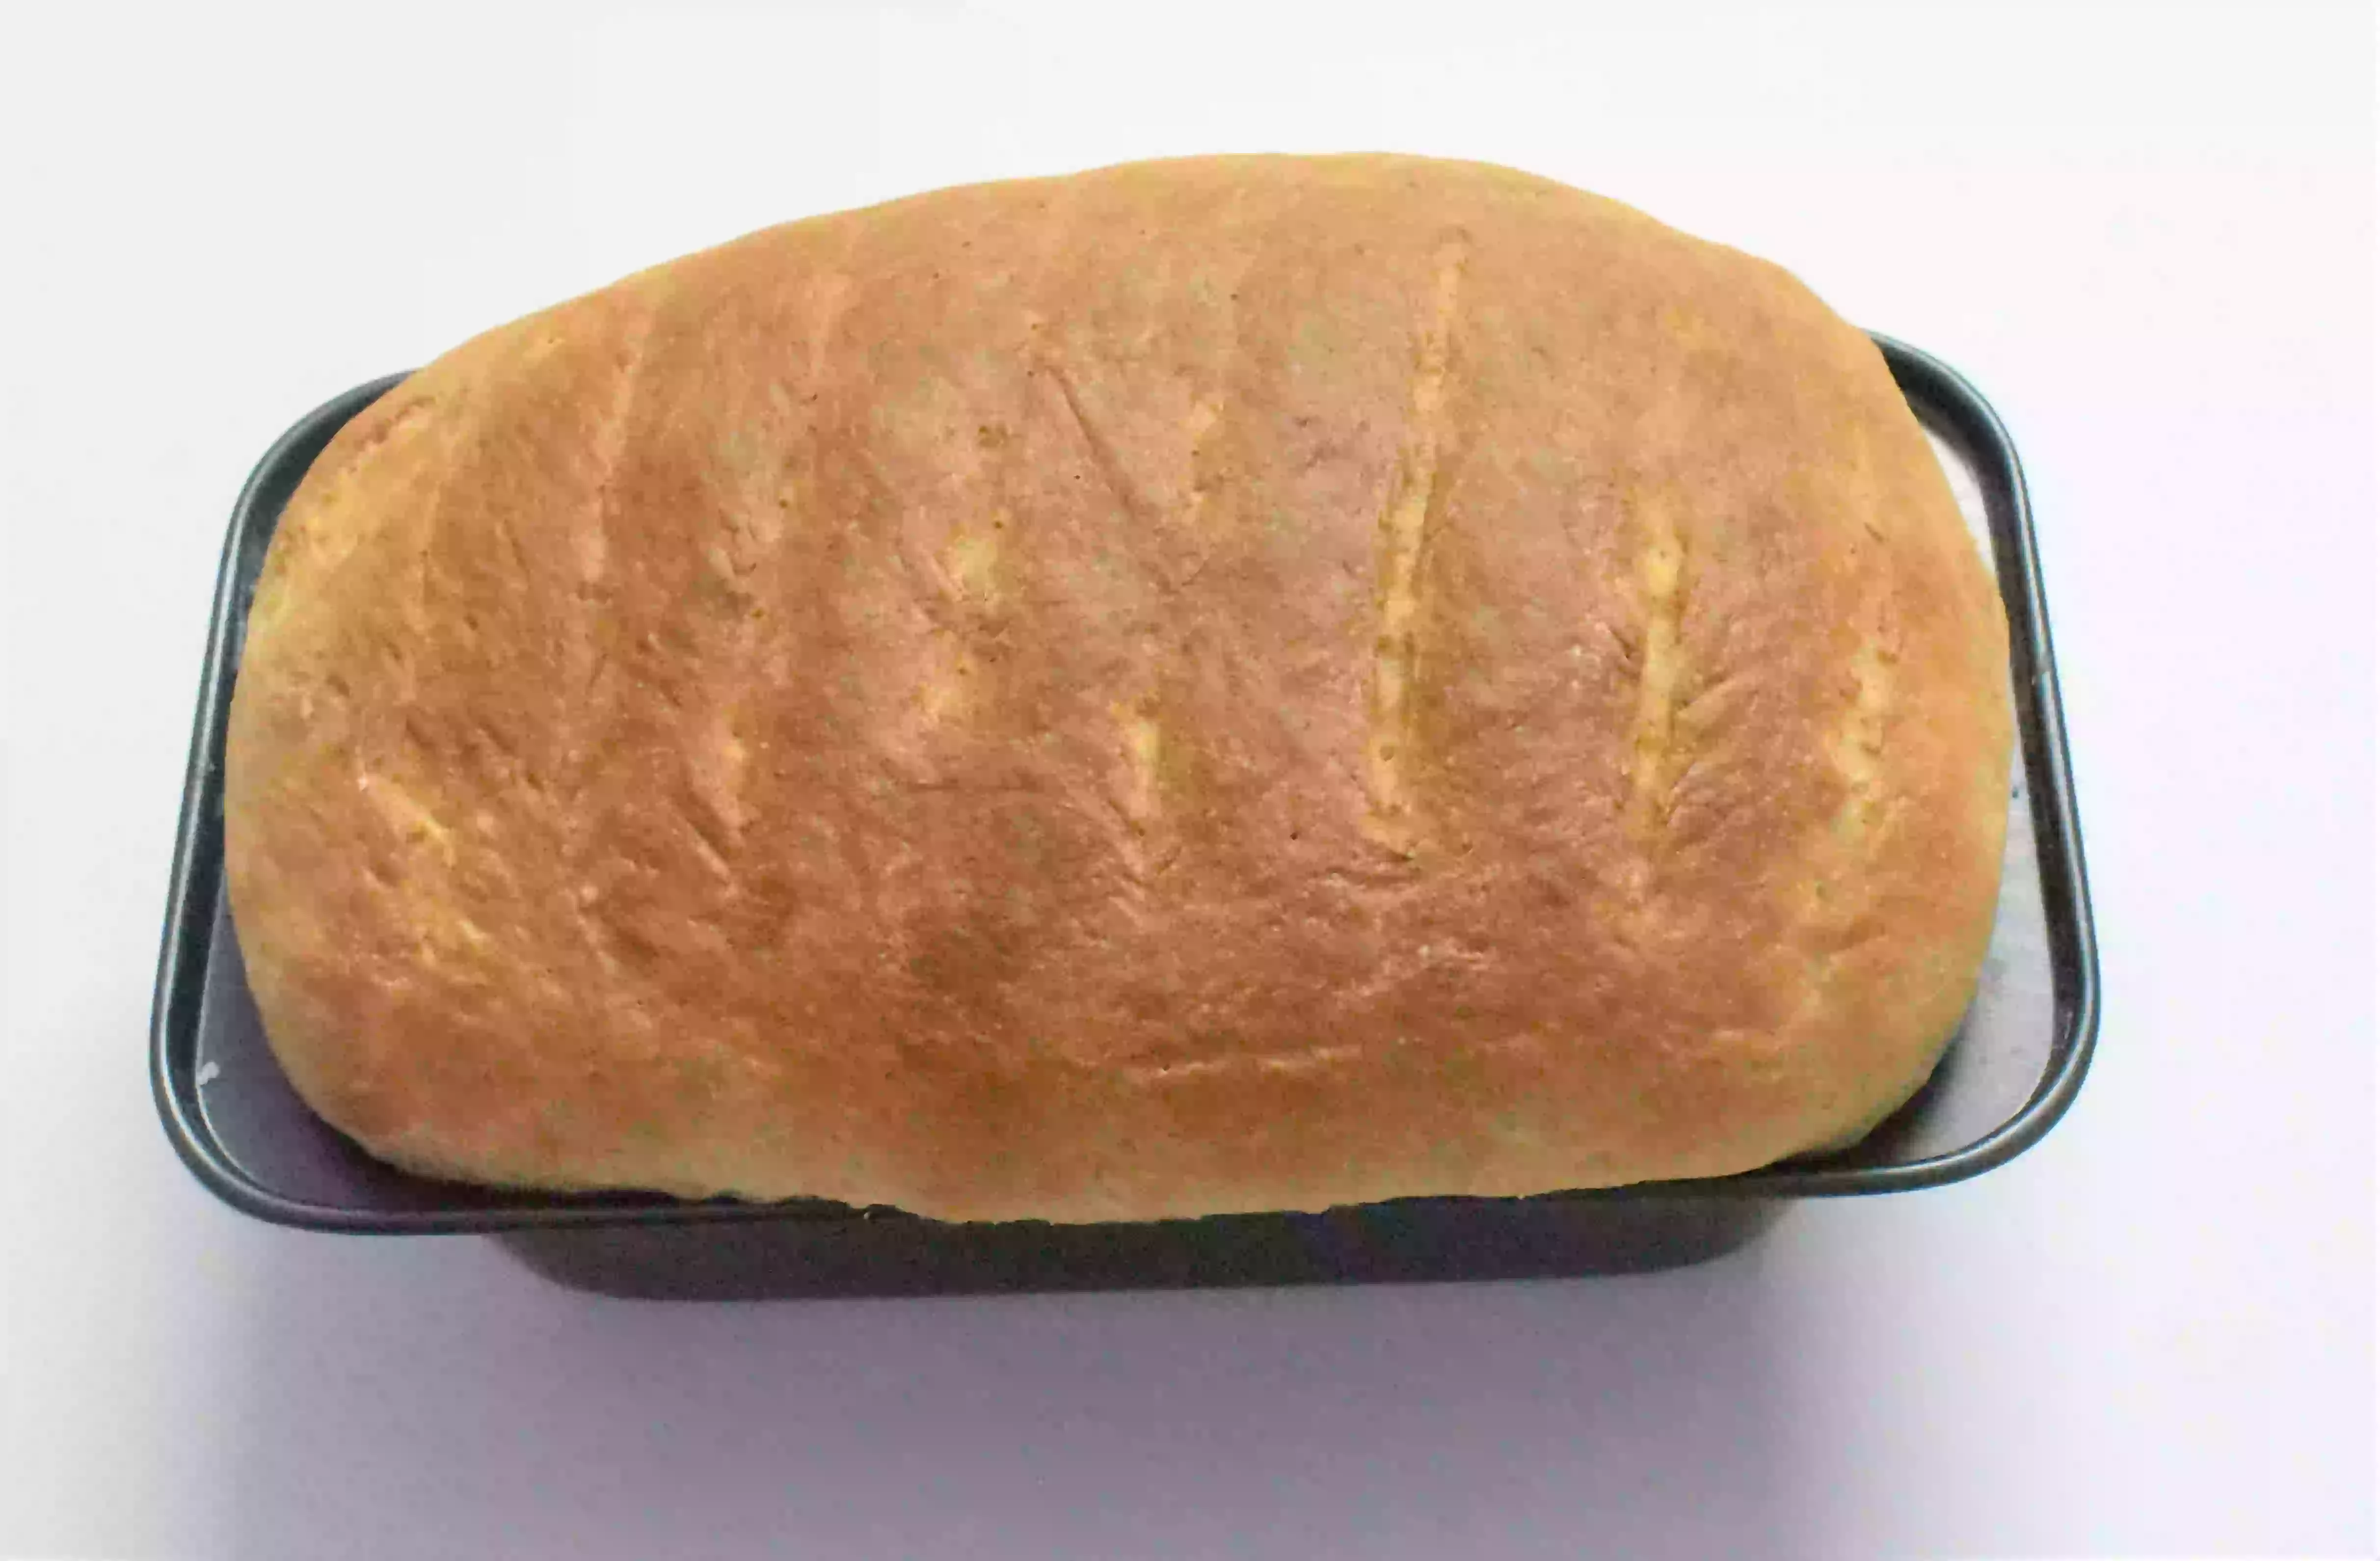 bake the brown bread till it gets golden